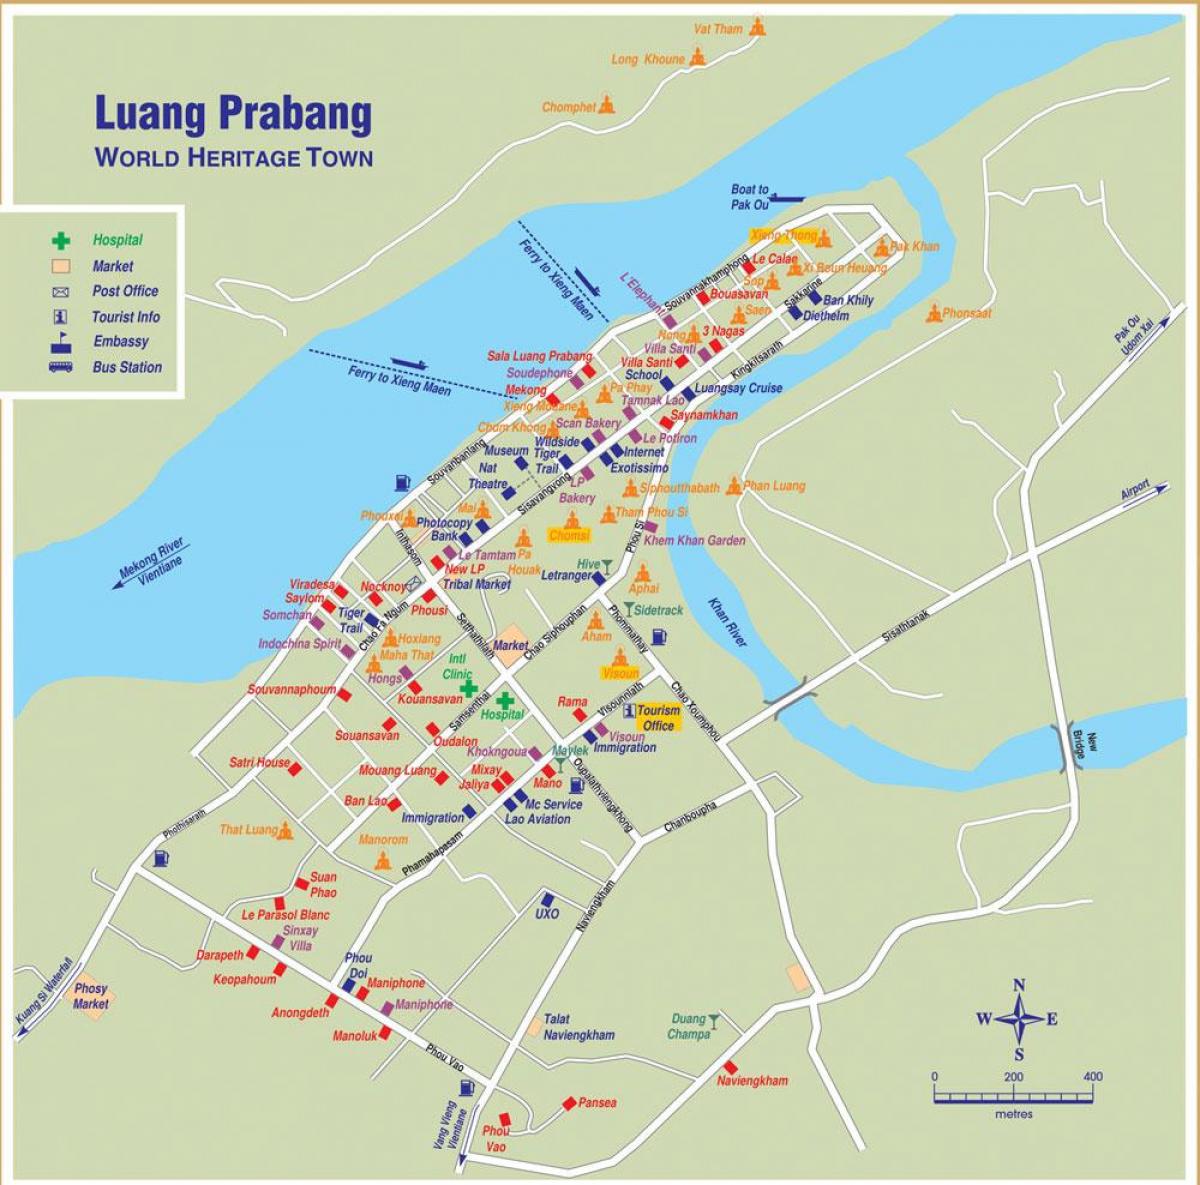 Mapa de luang prabang, laos 